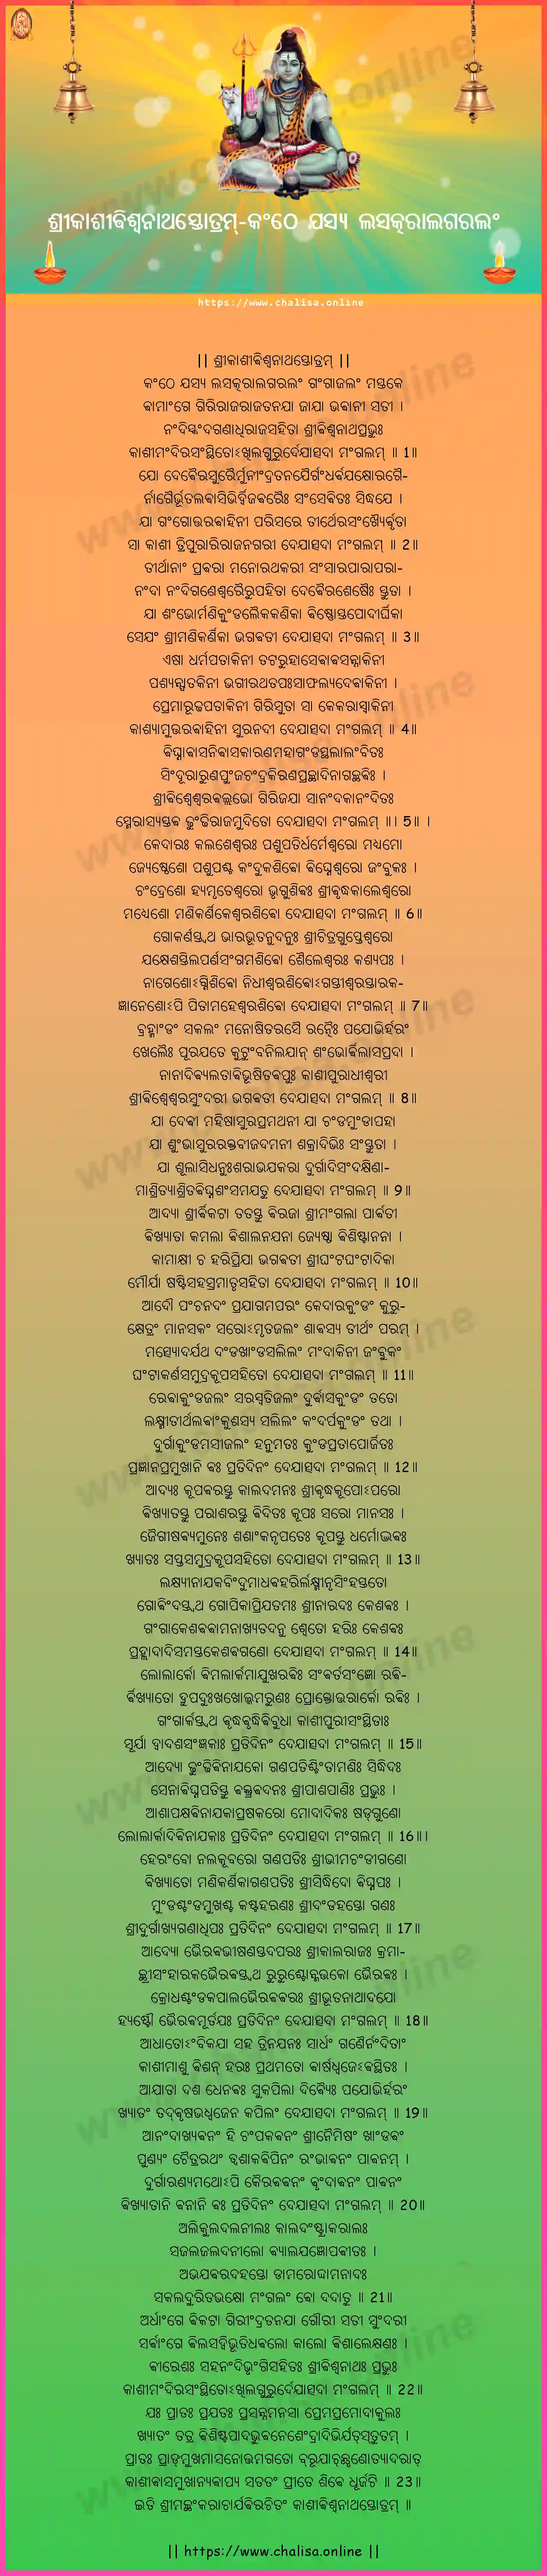 kanthe-yasya-lasatkaralagaralam-sri-kashi-visvanatha-stotram-oriya-oriya-lyrics-download